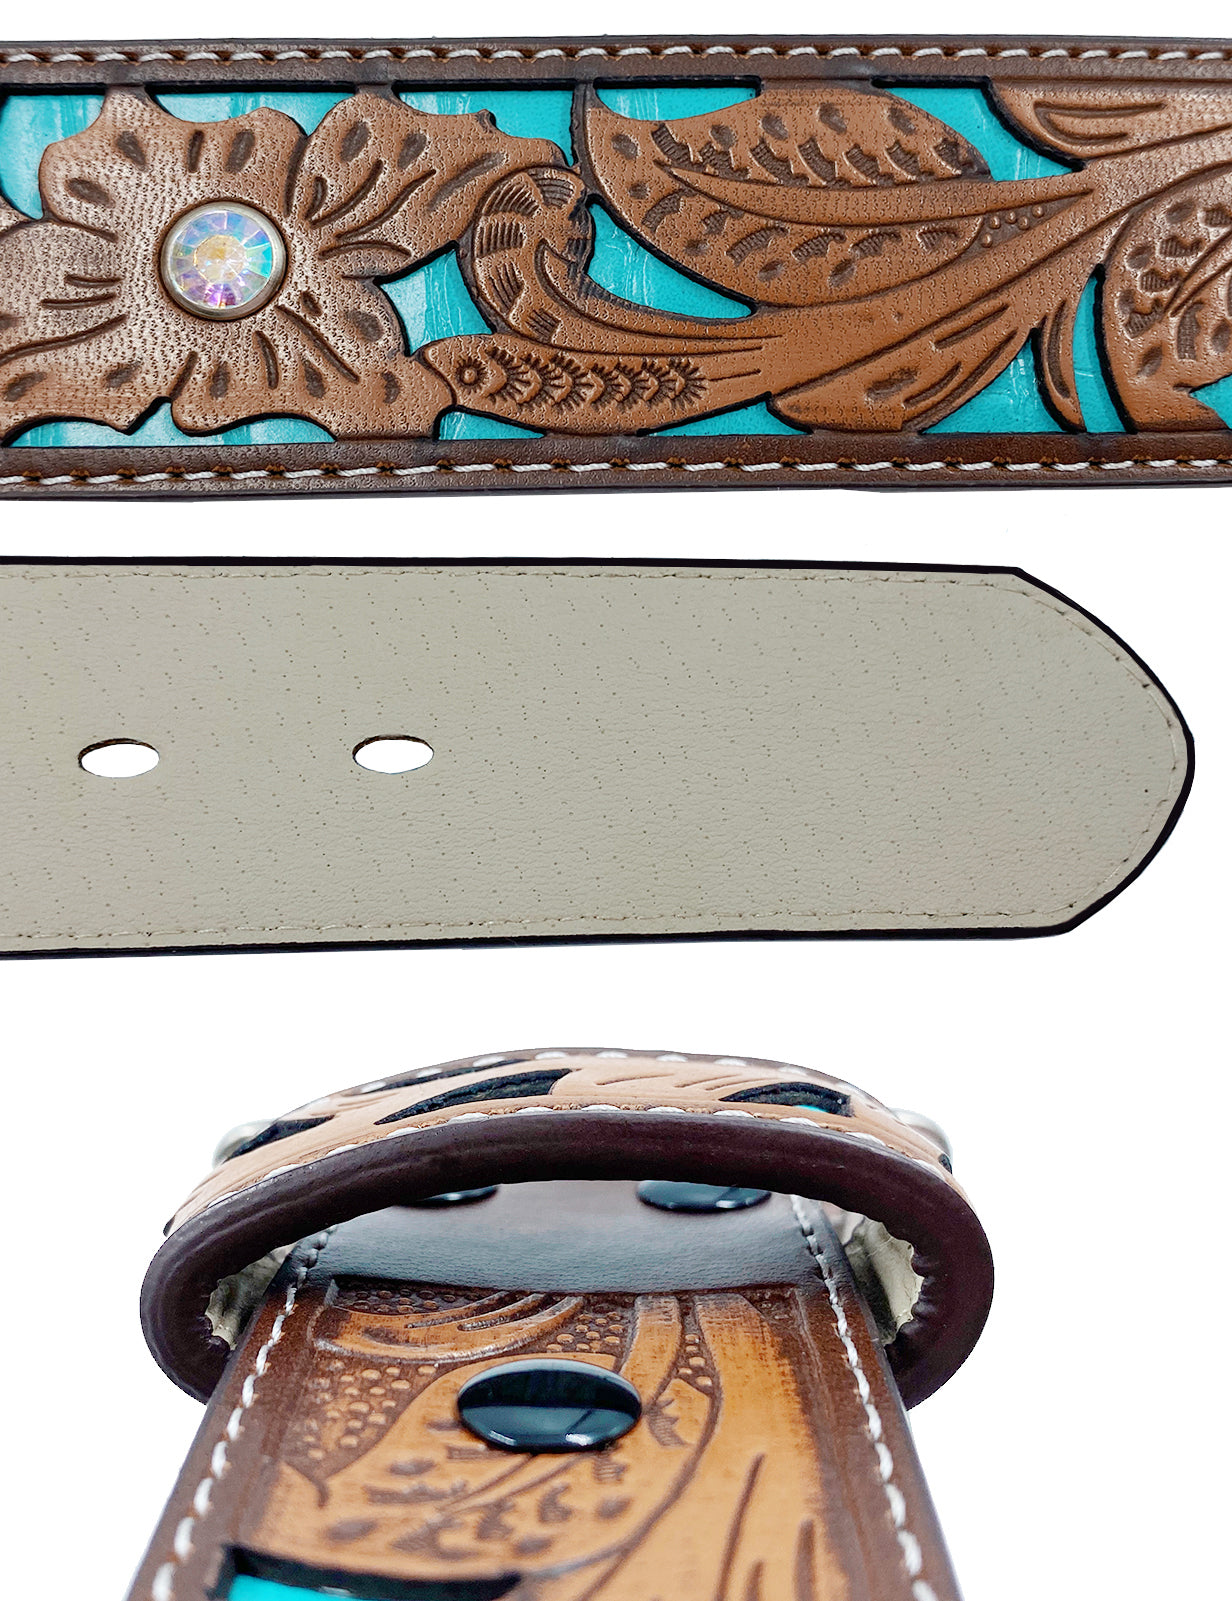 TOPACC Western Turquoise Belts - Flor turquesa Hebilla de cinturón Cobre/Bronce